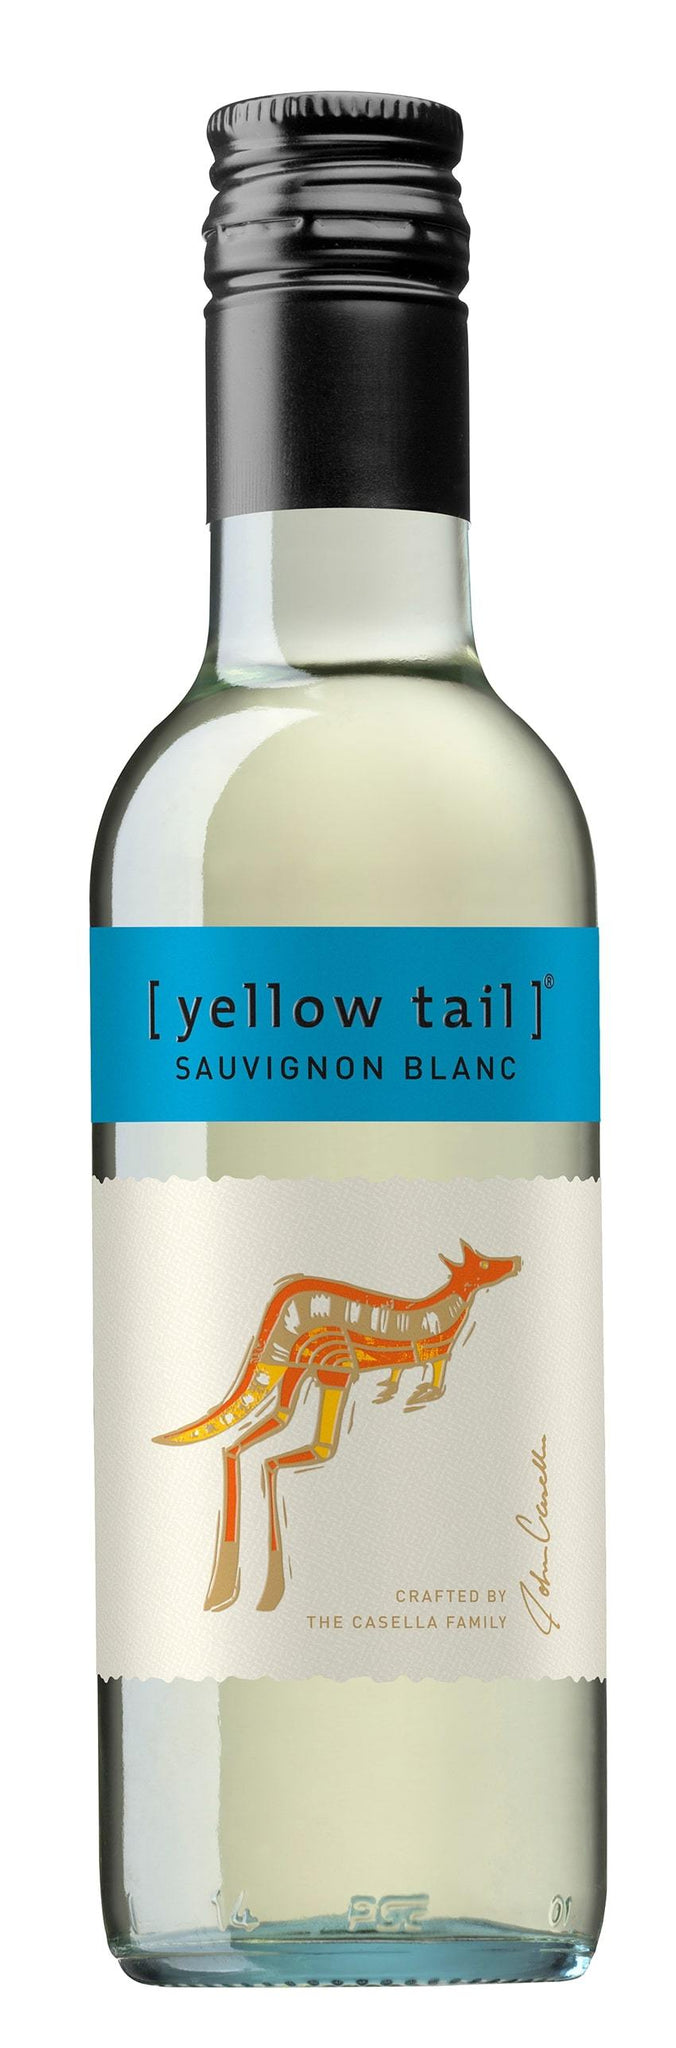 Yellowtail Sauv Blanc 187ml